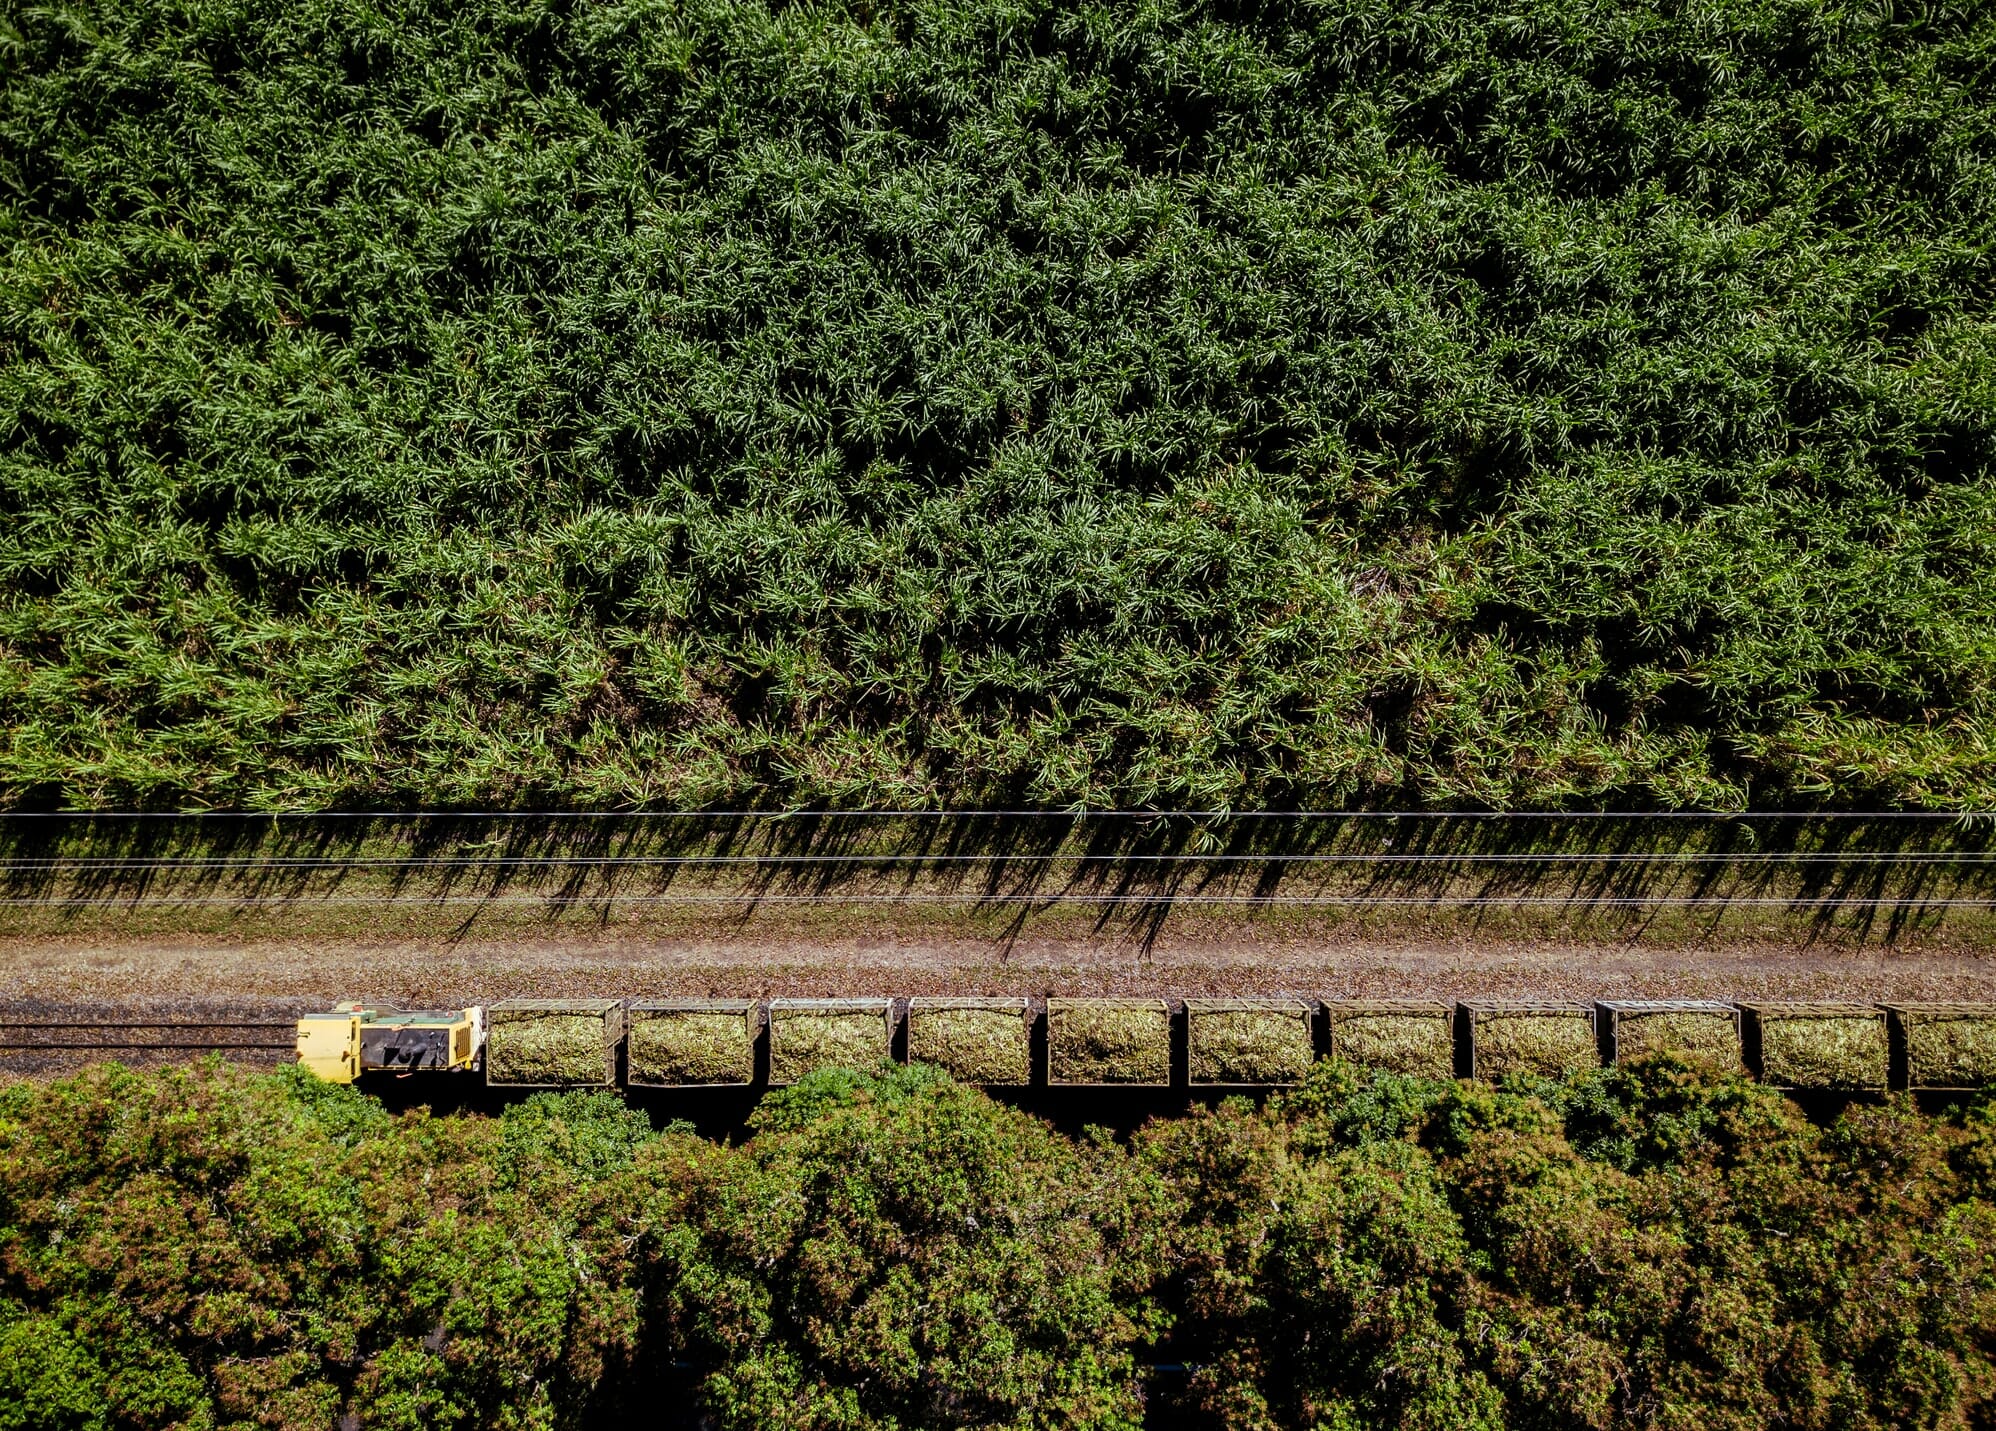 Sugar train along the sugar fields in Mackay, QLD, Australia